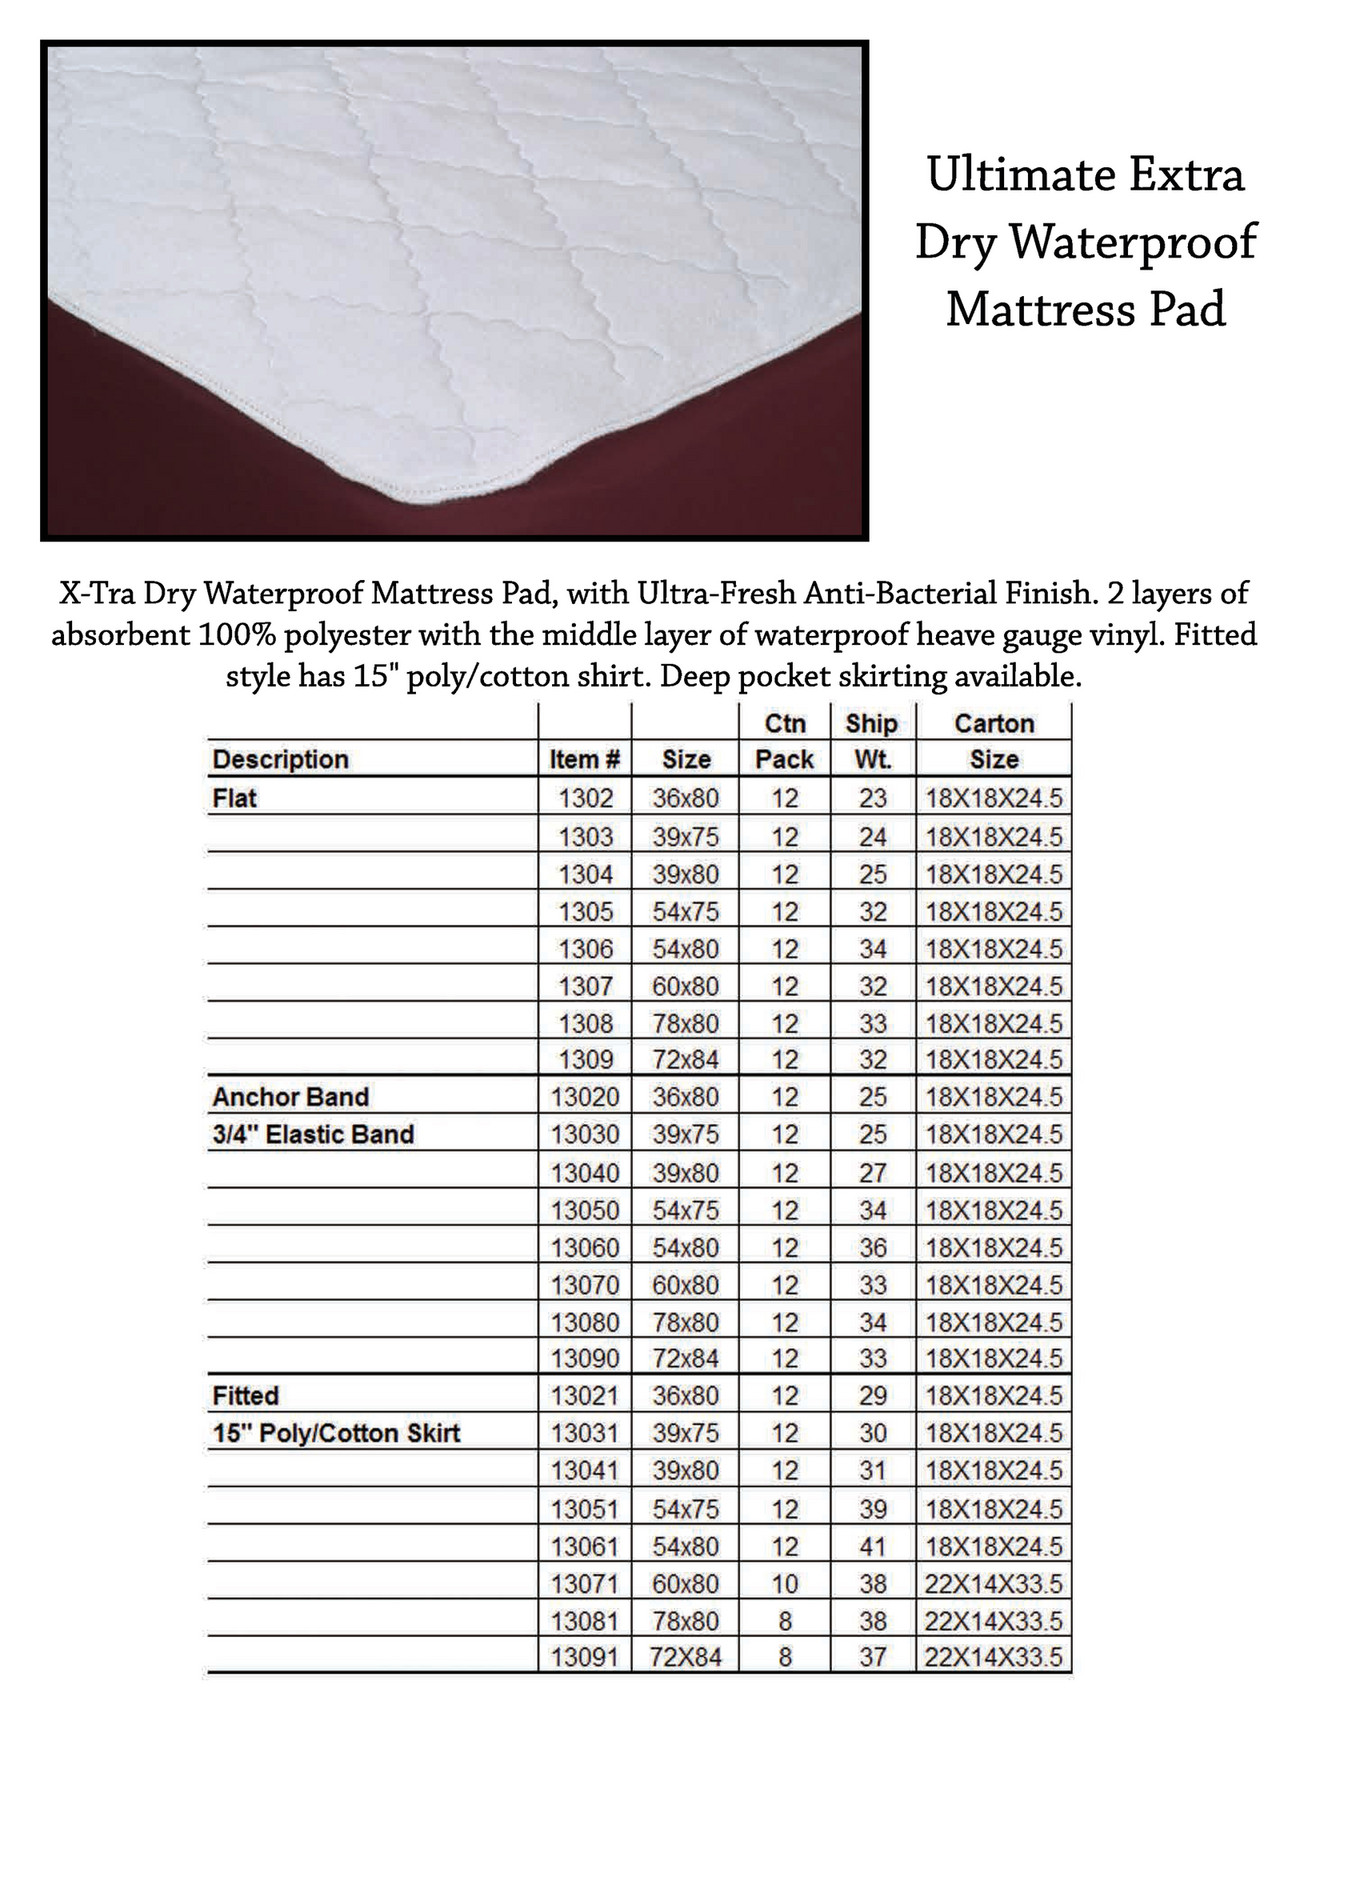 JS Fiber Fossfill Fossguard Hospitality Supreme Pillow Standard 21x27 24Oz.  Fill 12 Per Case Price Per Each